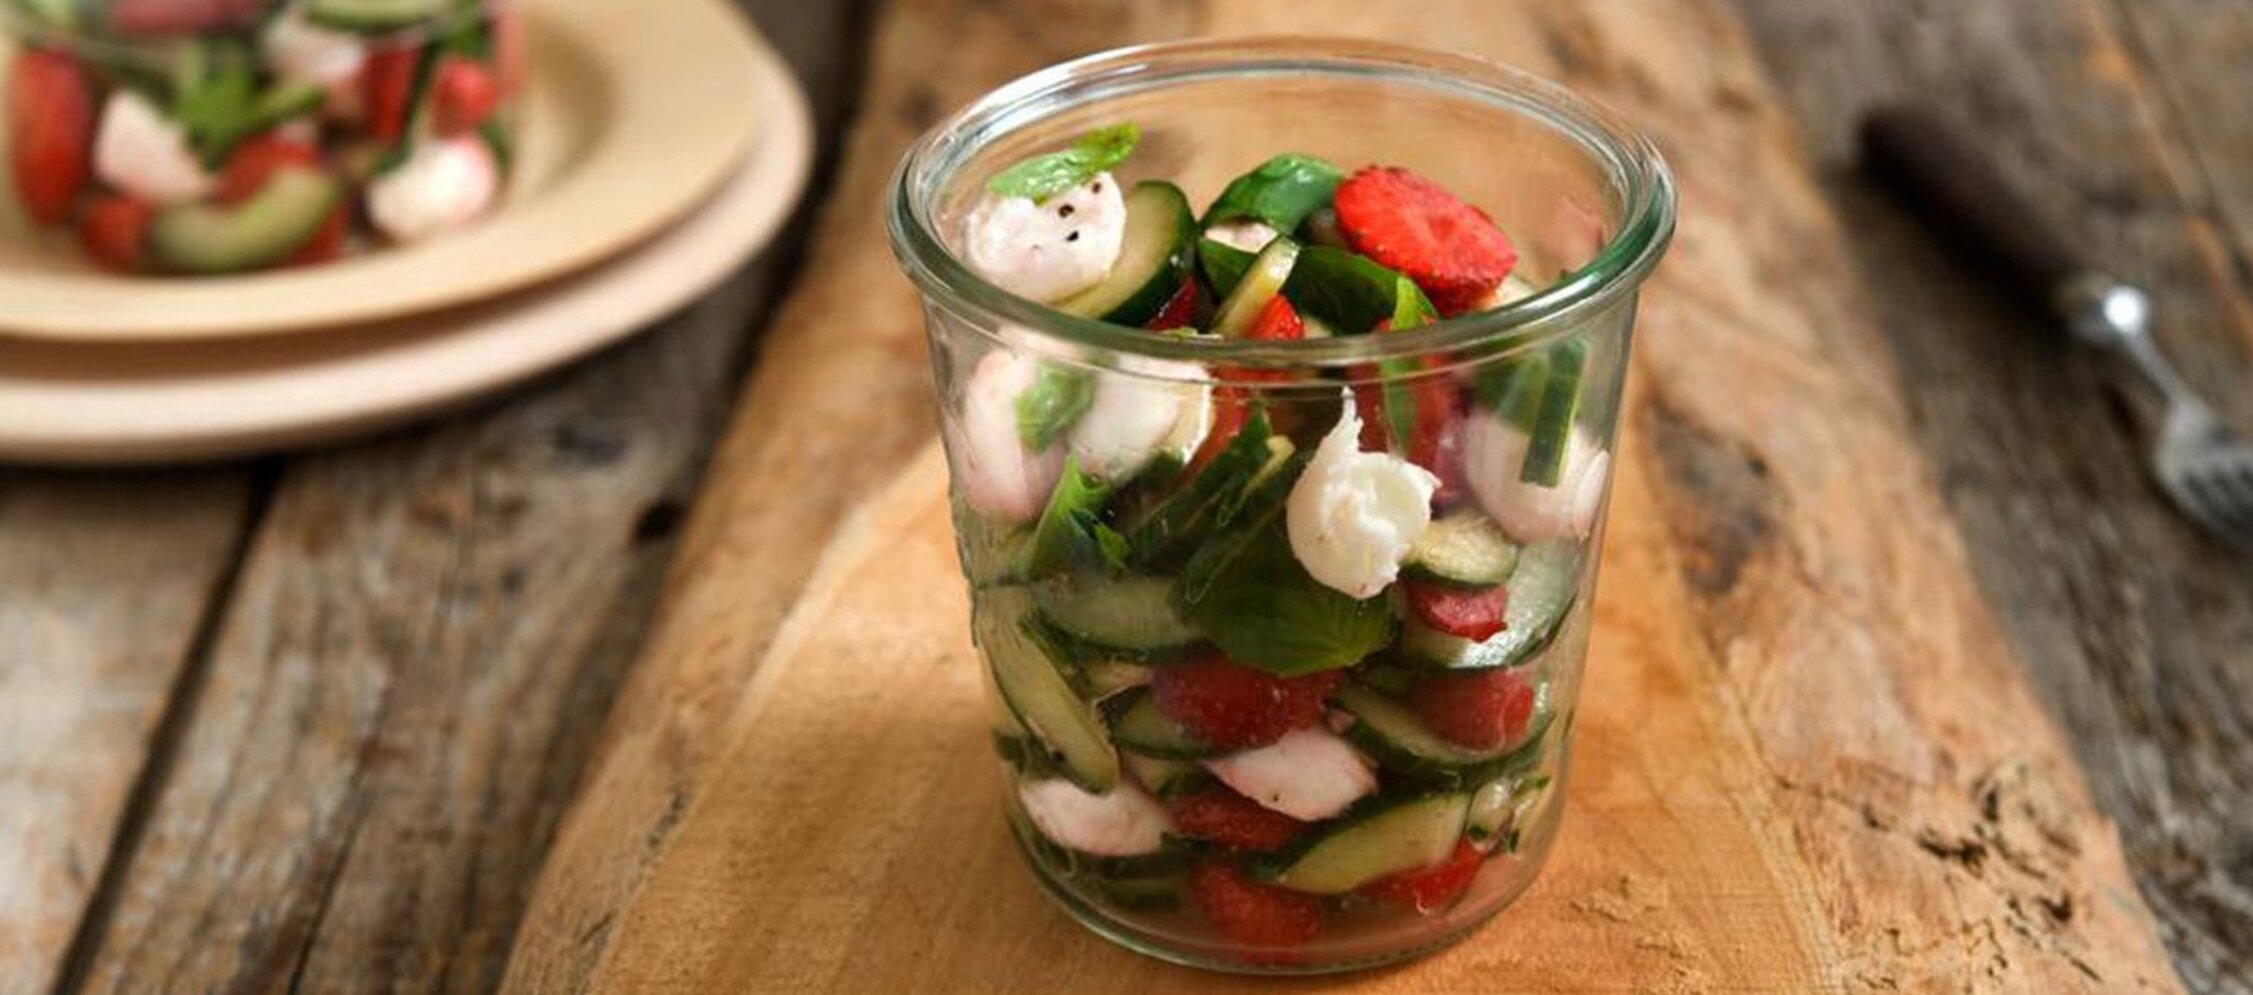 Rezept Gurken-Mozzarella Salat mit Erdbeeren